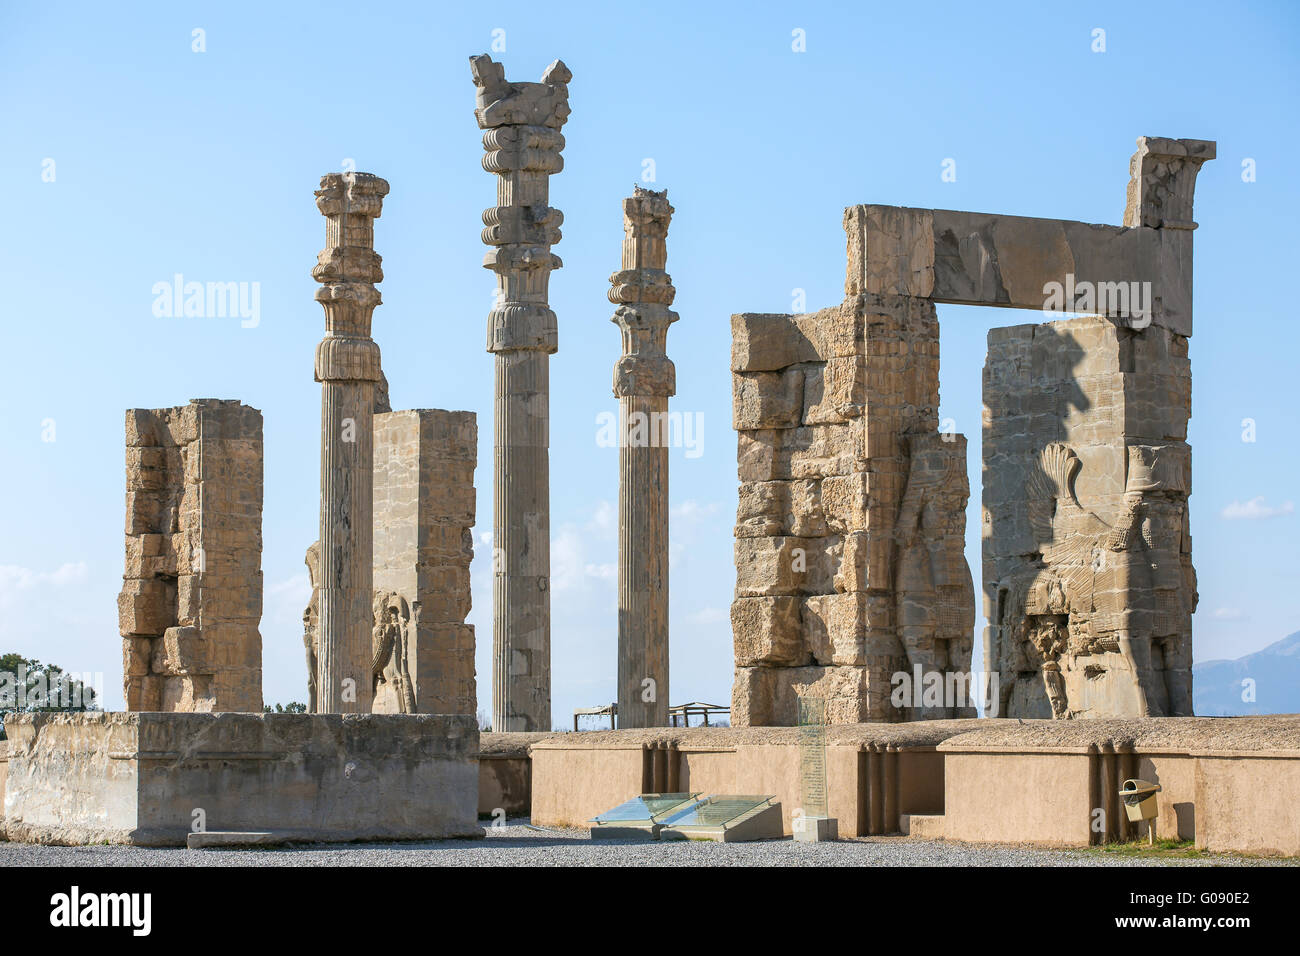 Ancient columns in Persepolis city, Iran Stock Photo